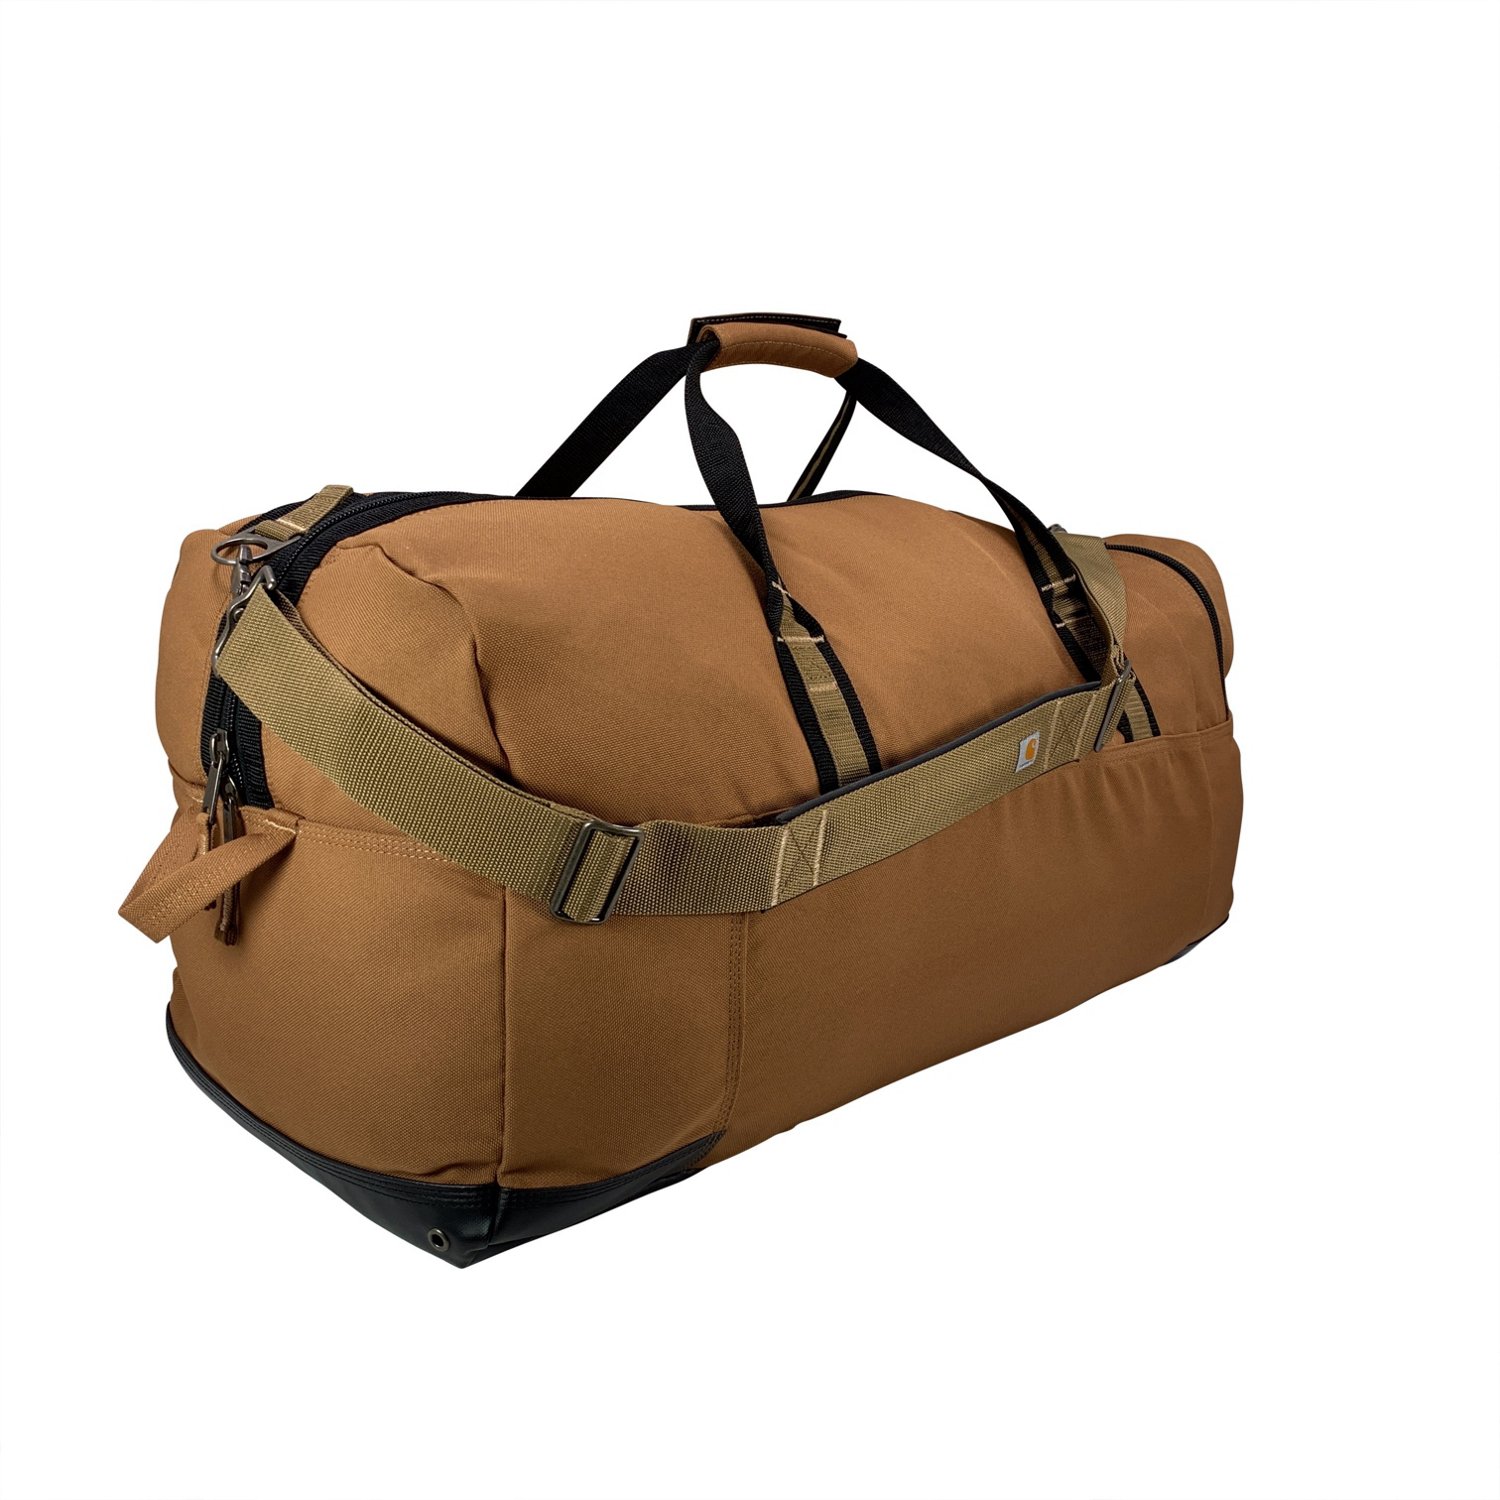 Carhartt Classic 120L Duffel Bag | Free Shipping at Academy